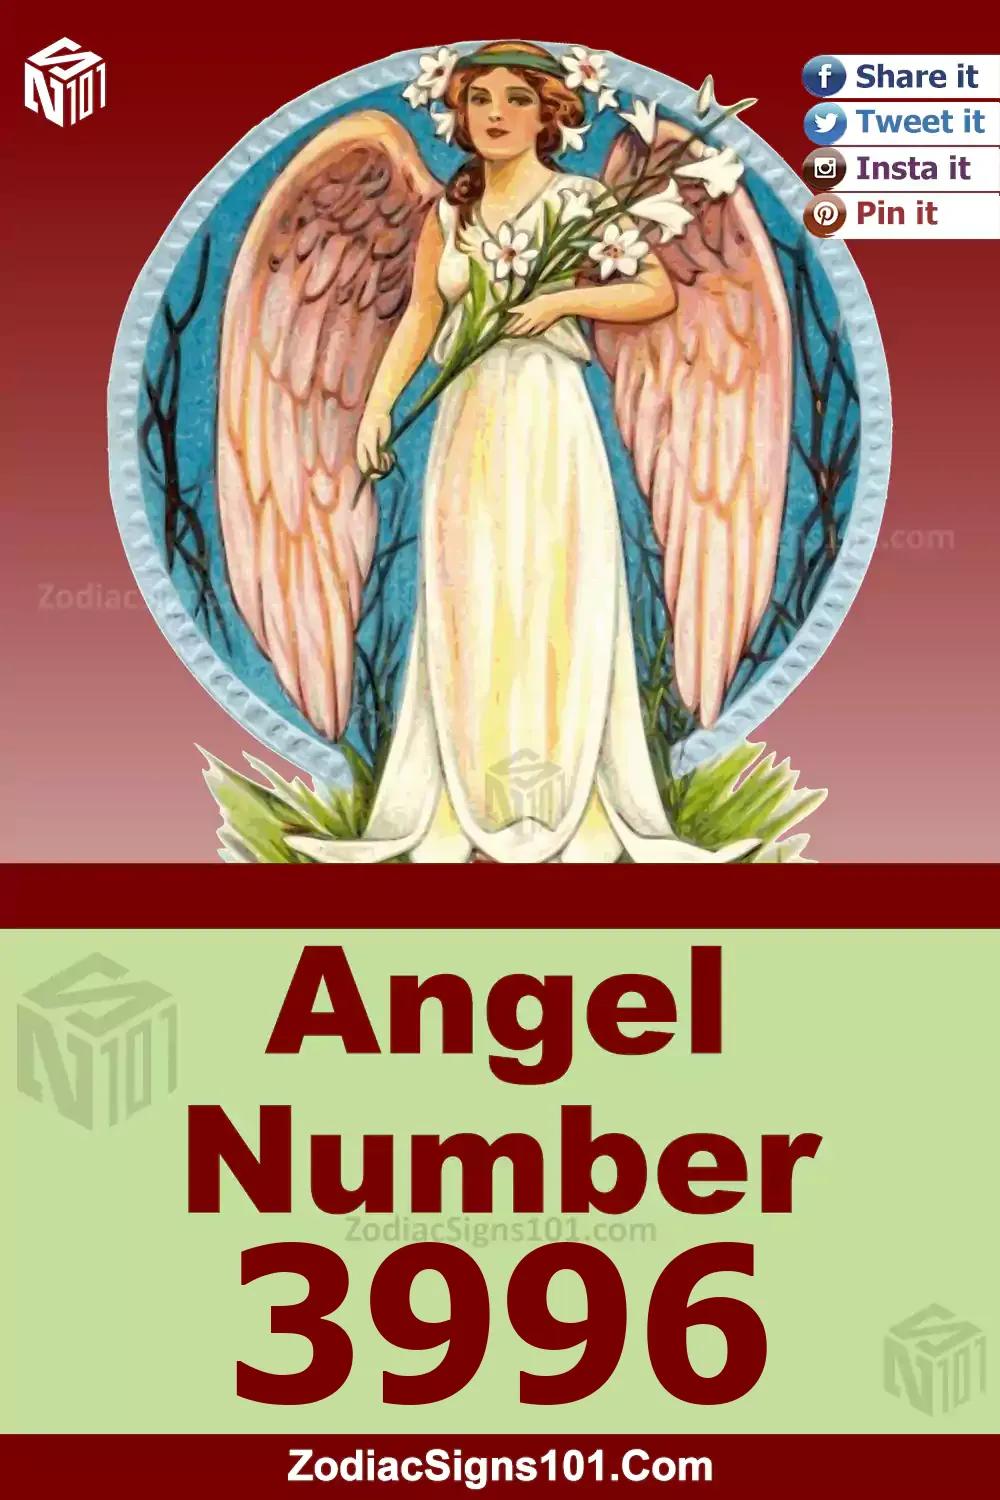 3996-Angel-Number-Meaning.jpg